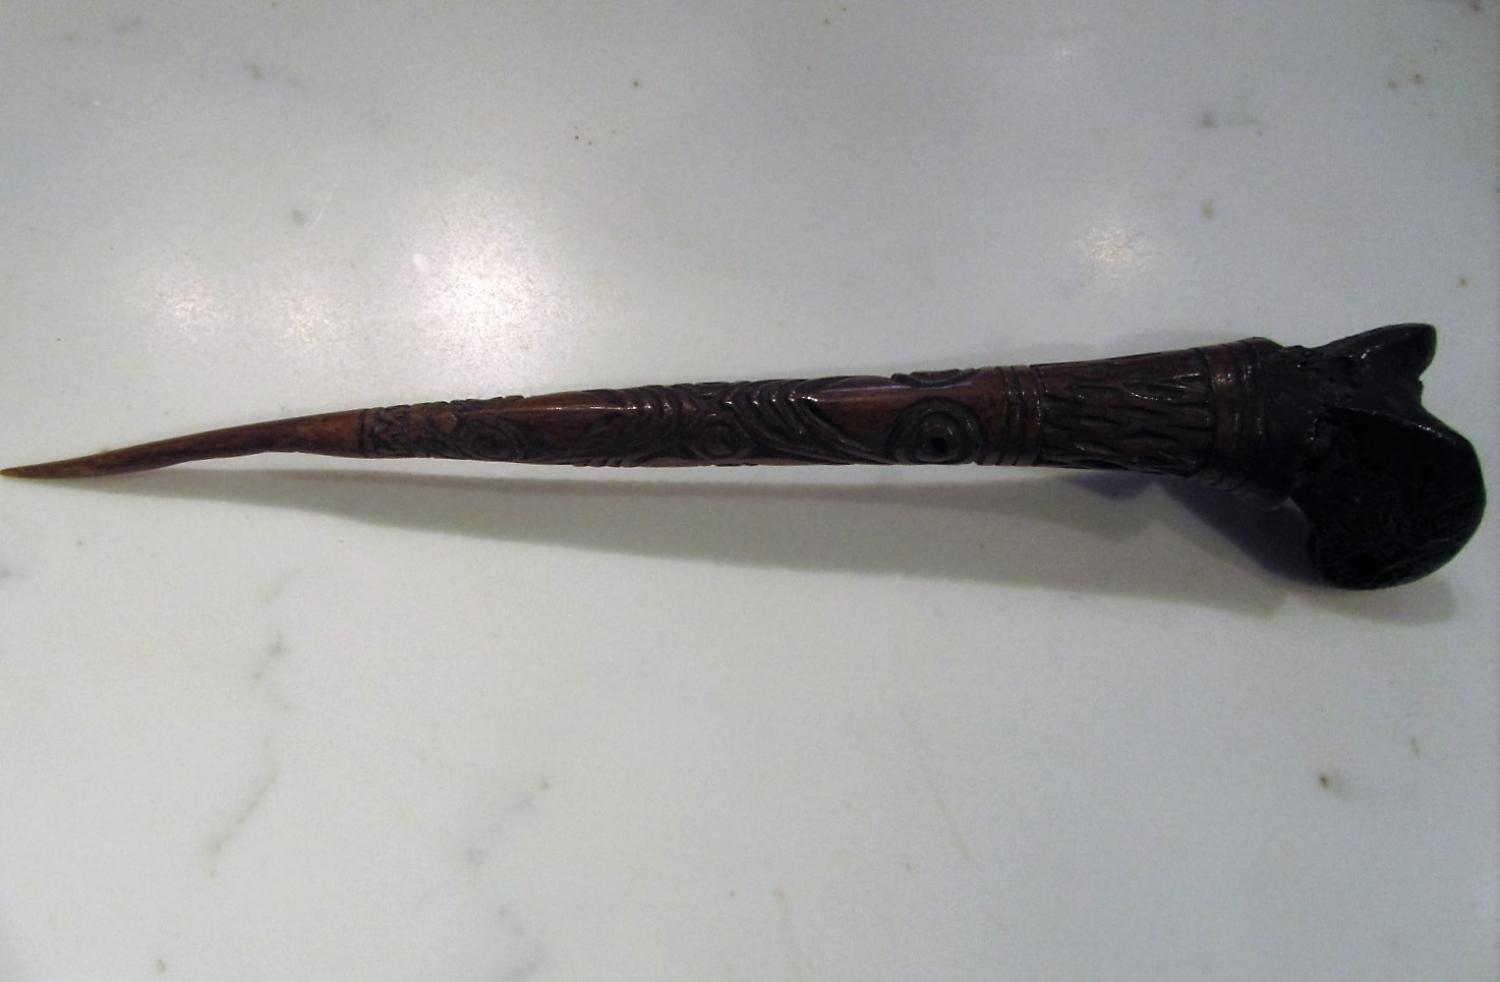 A tribal carved bone dagger